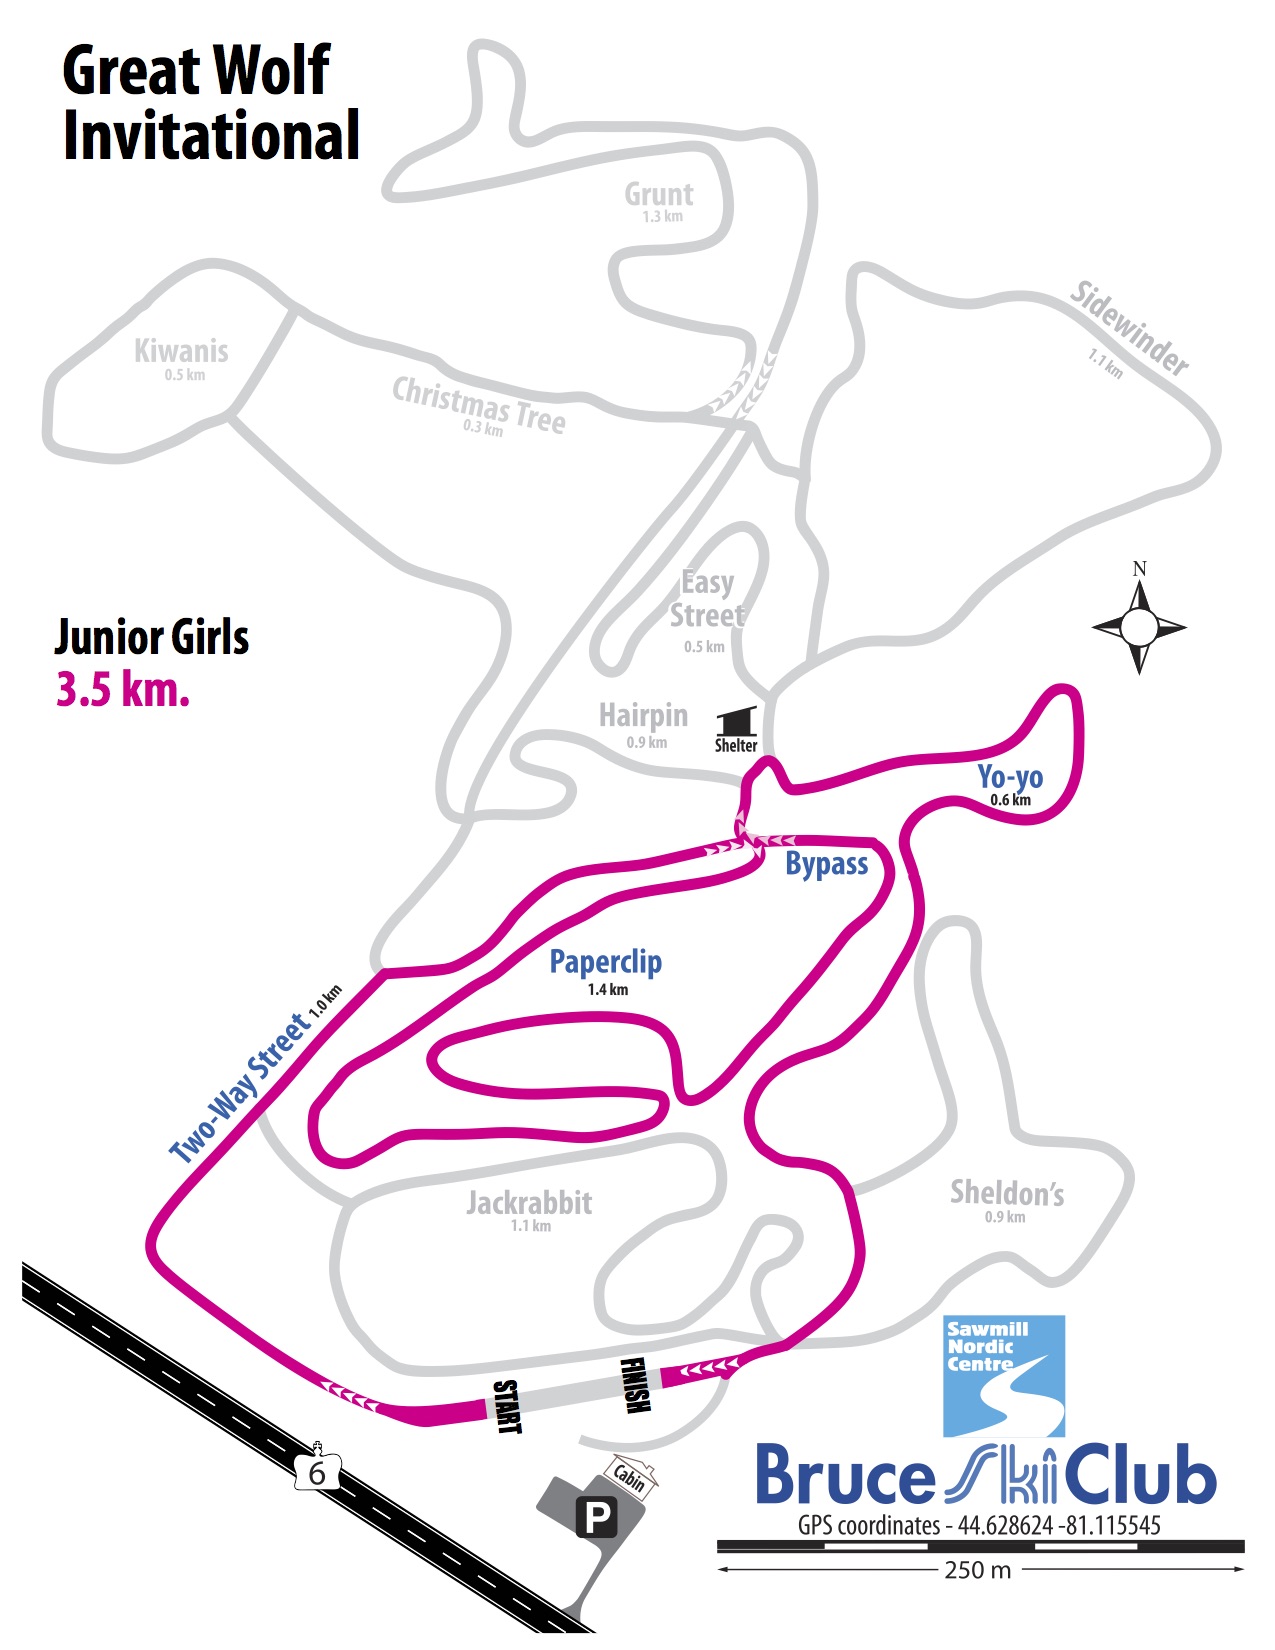 Great Wolf Invitational Cross-Country Ski Race, Hepworth, Ontario - Map: Junior Girls